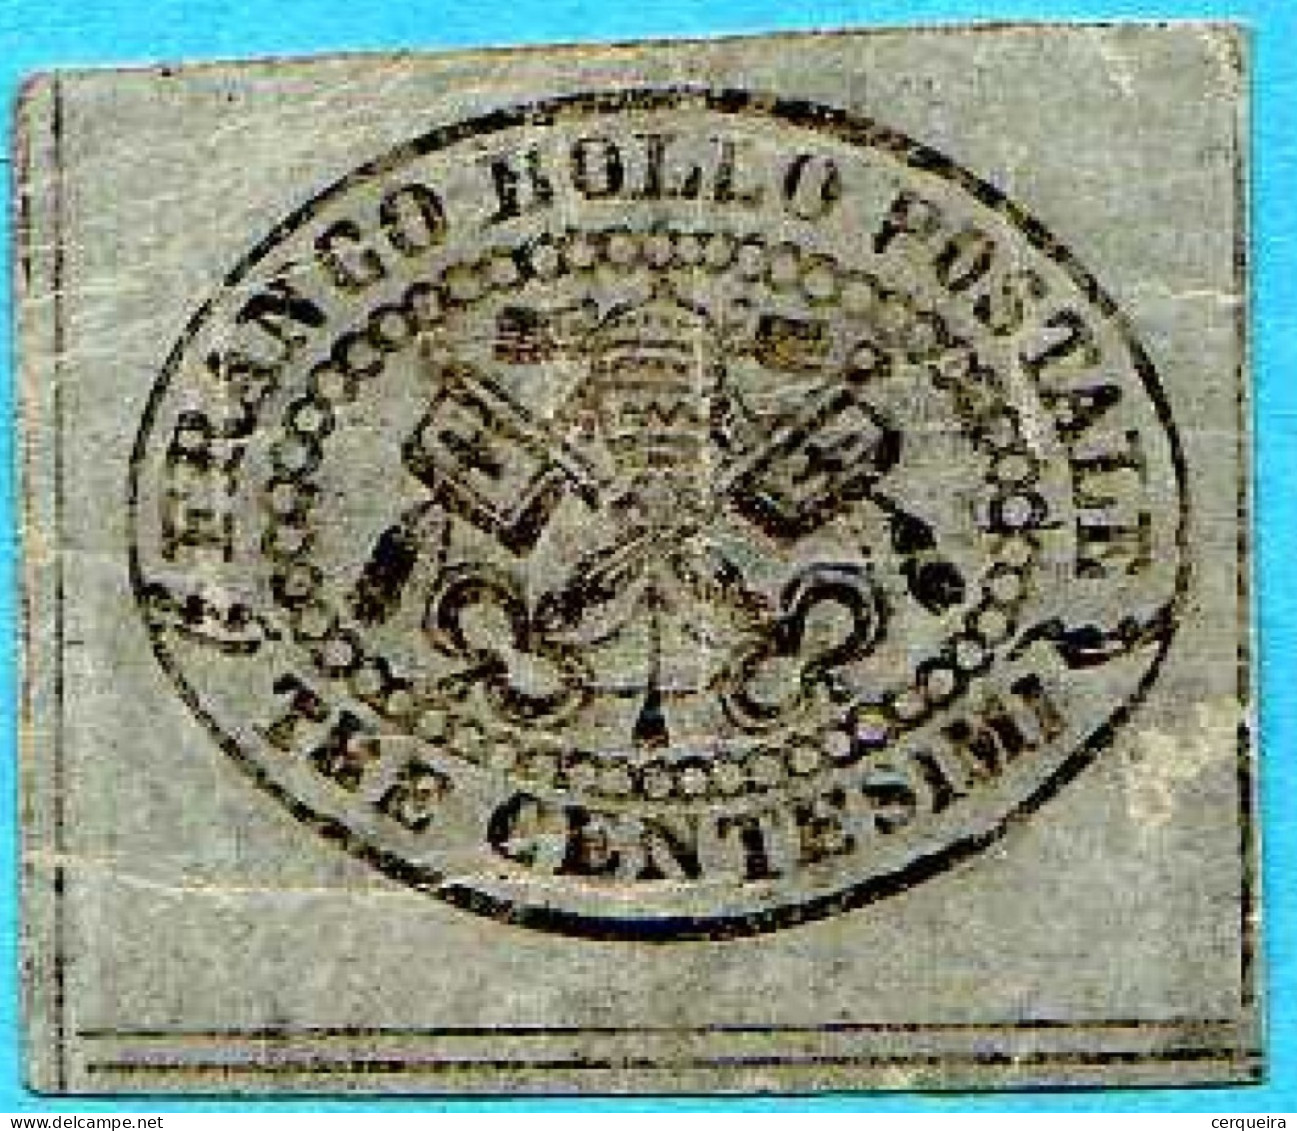 Selo Dos Estados Romanos Italianos, 1867,  Perfeito Estado, - ...-1850 Préphilatélie